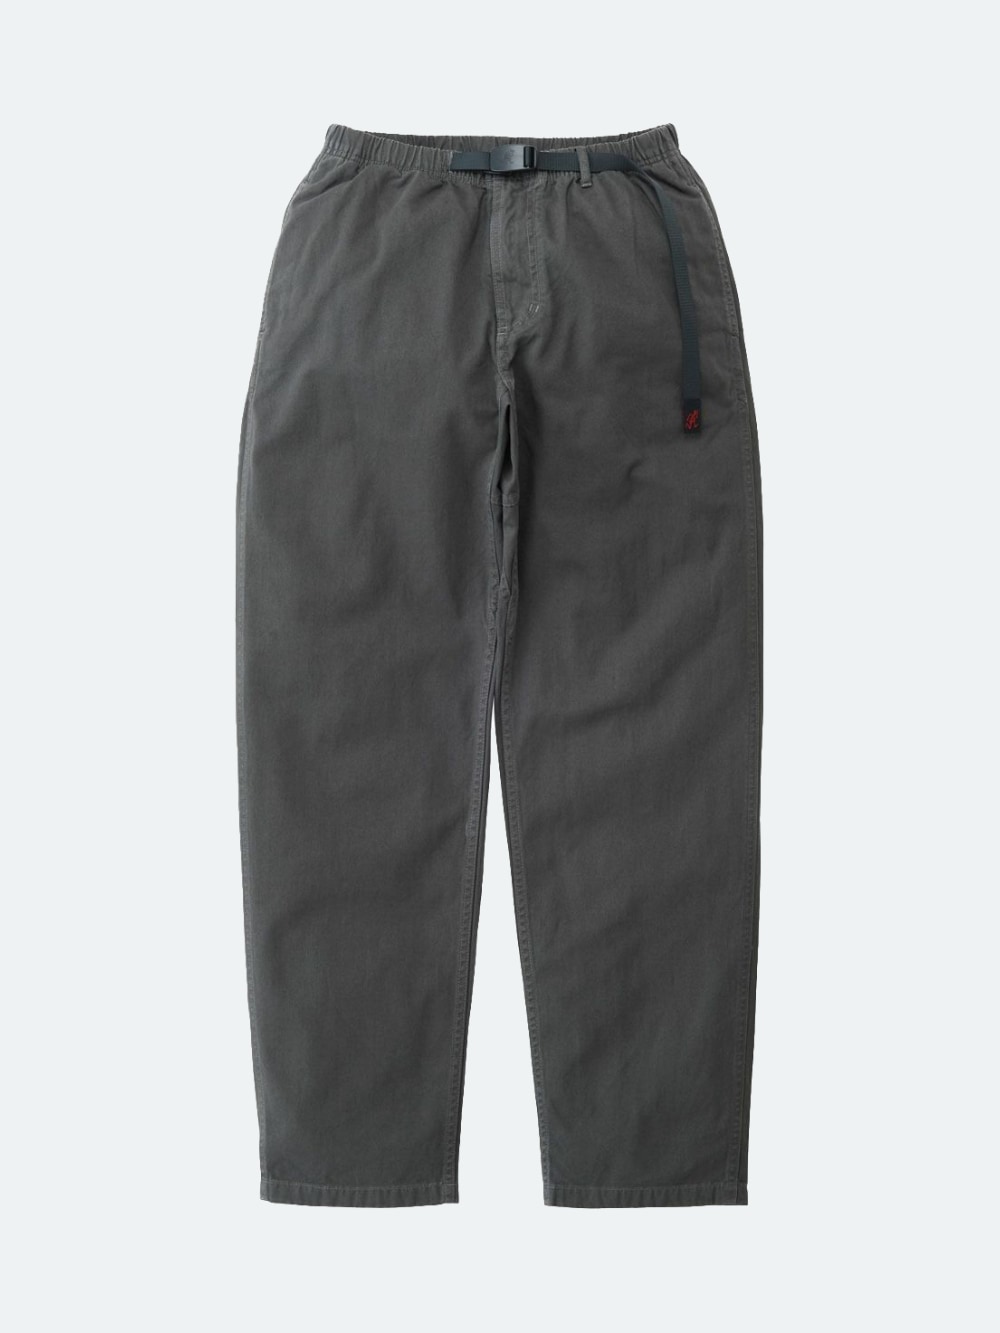 Gramicci: Gramicci Pants - Charcoal | Gotengo Menswear